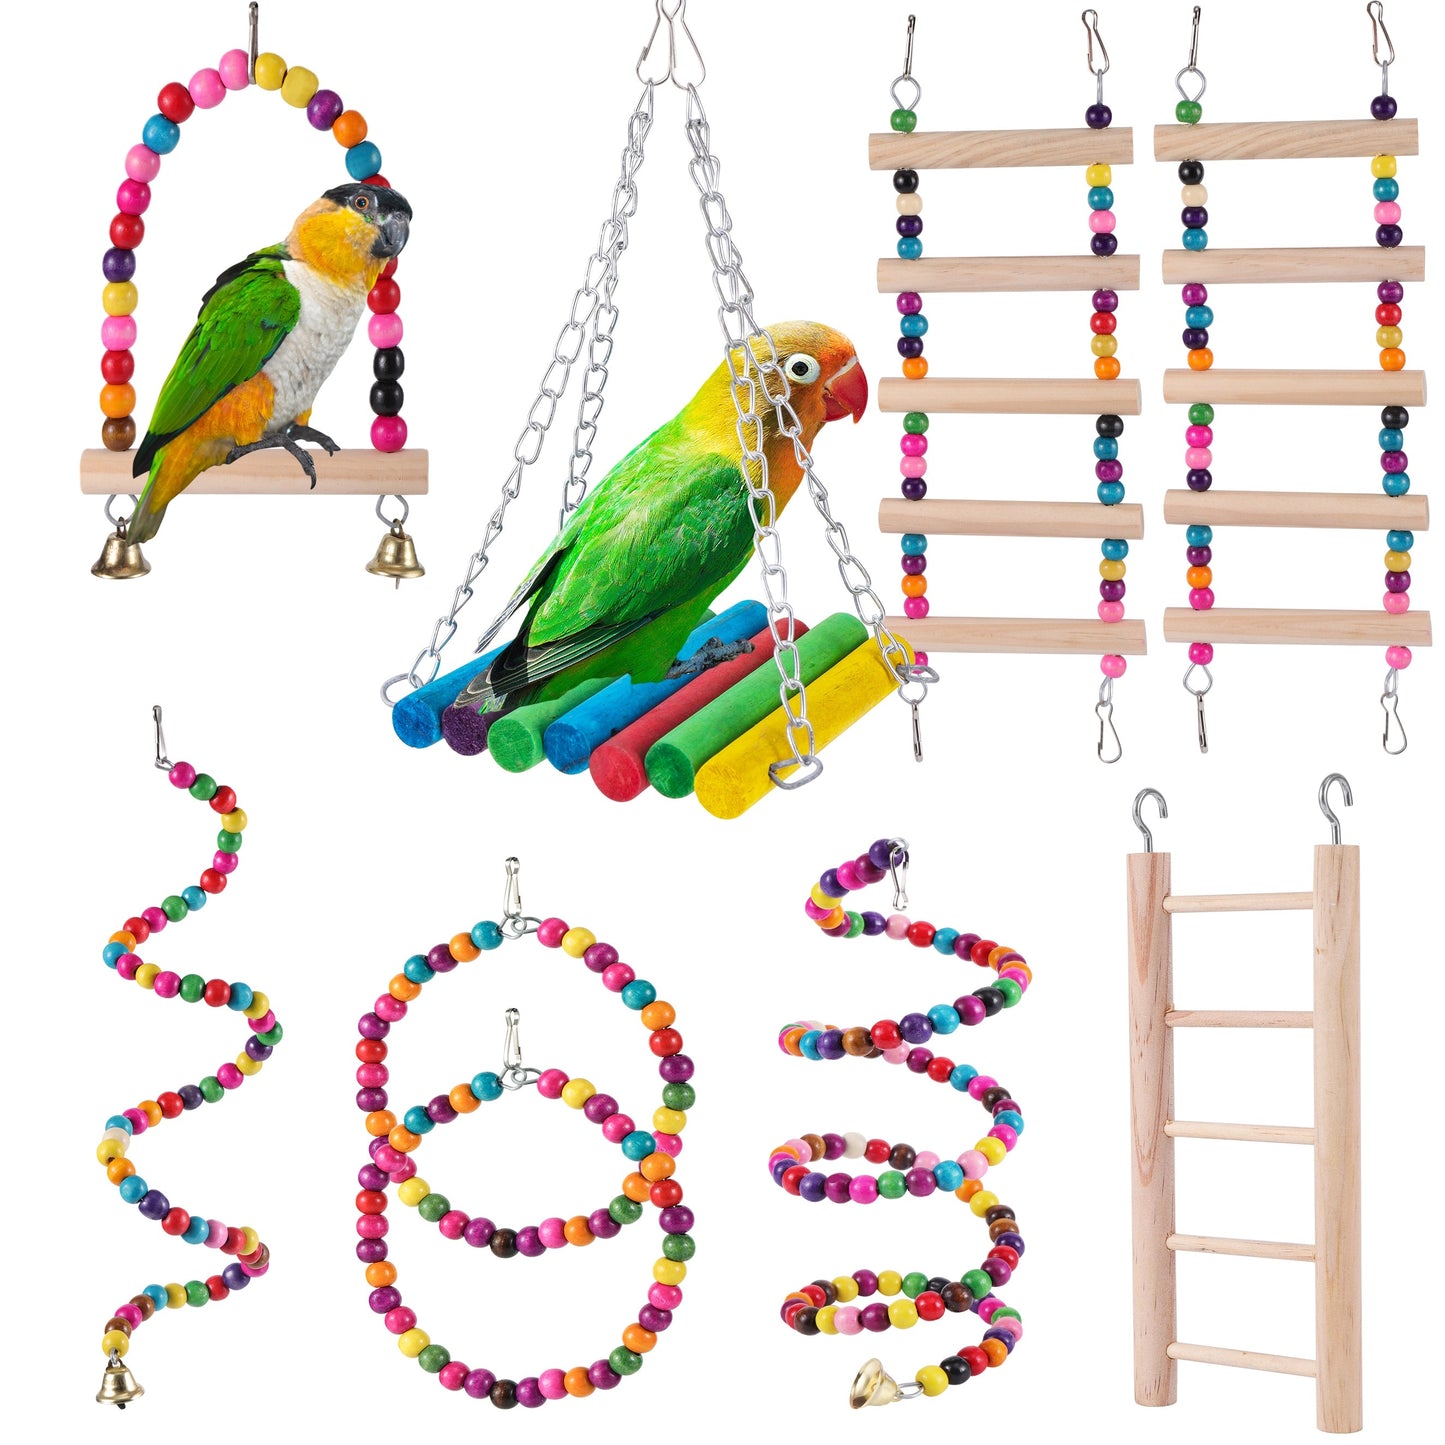 Bird Toy Swing set